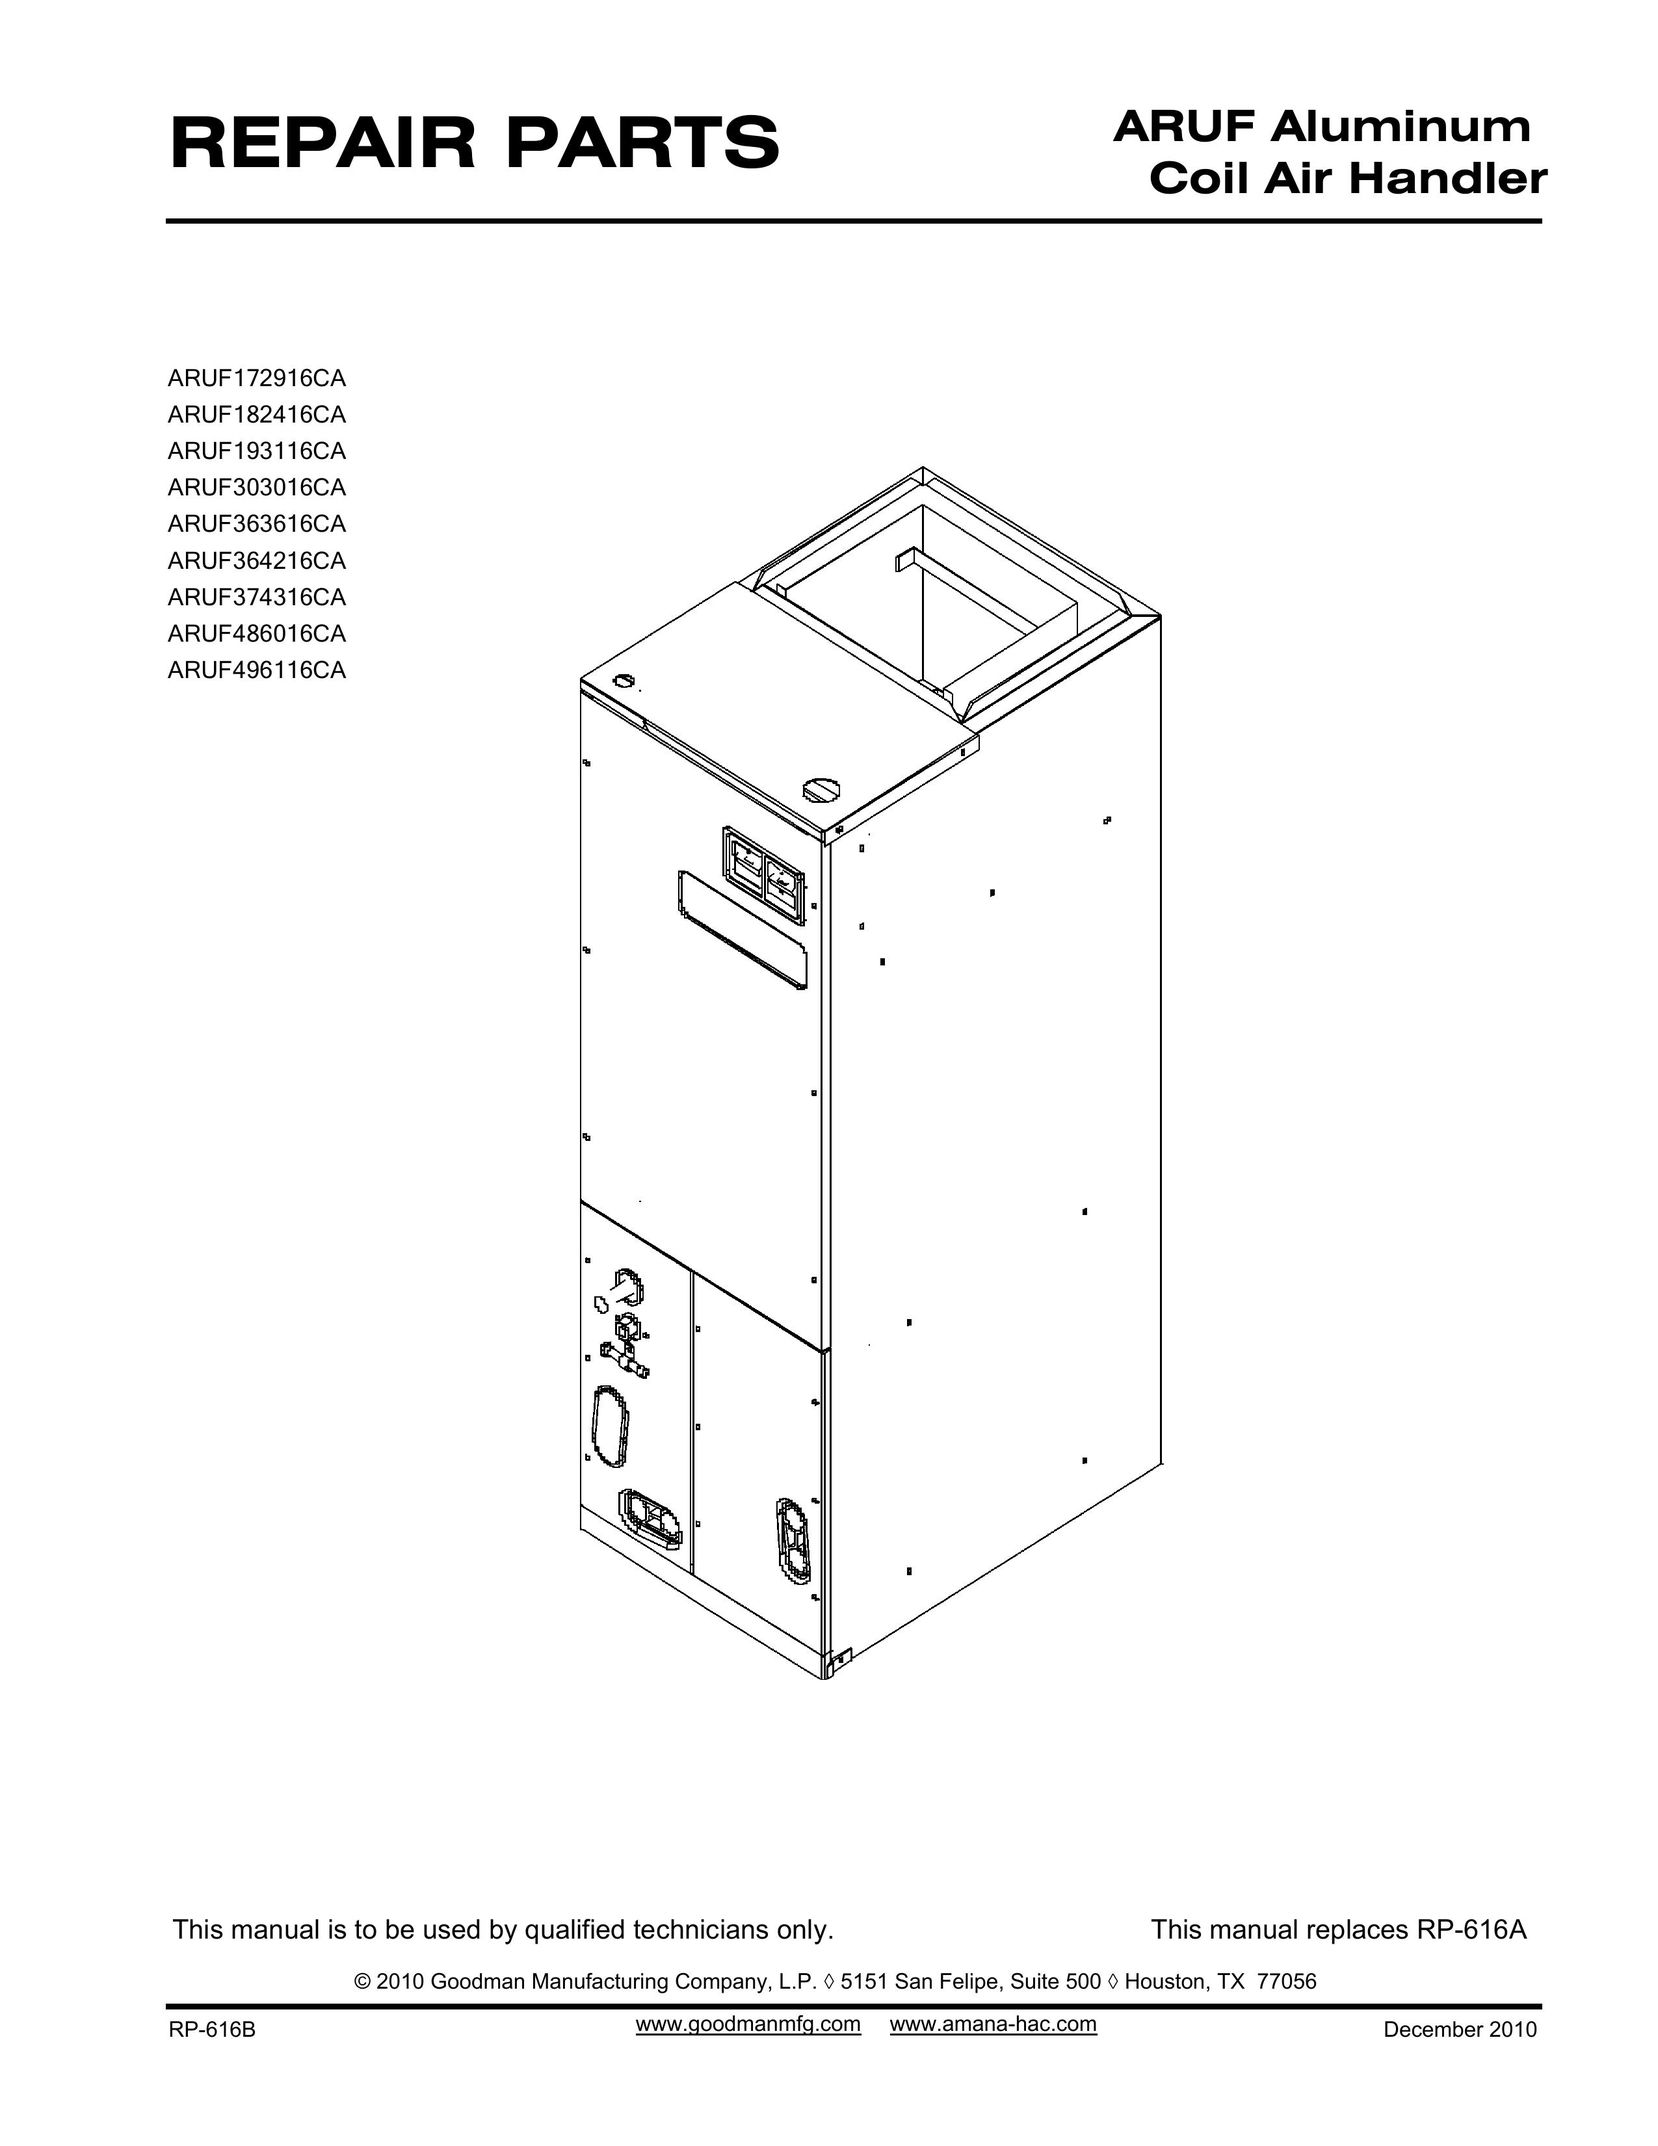 Goodman Mfg ARUF364216CA Air Conditioner User Manual